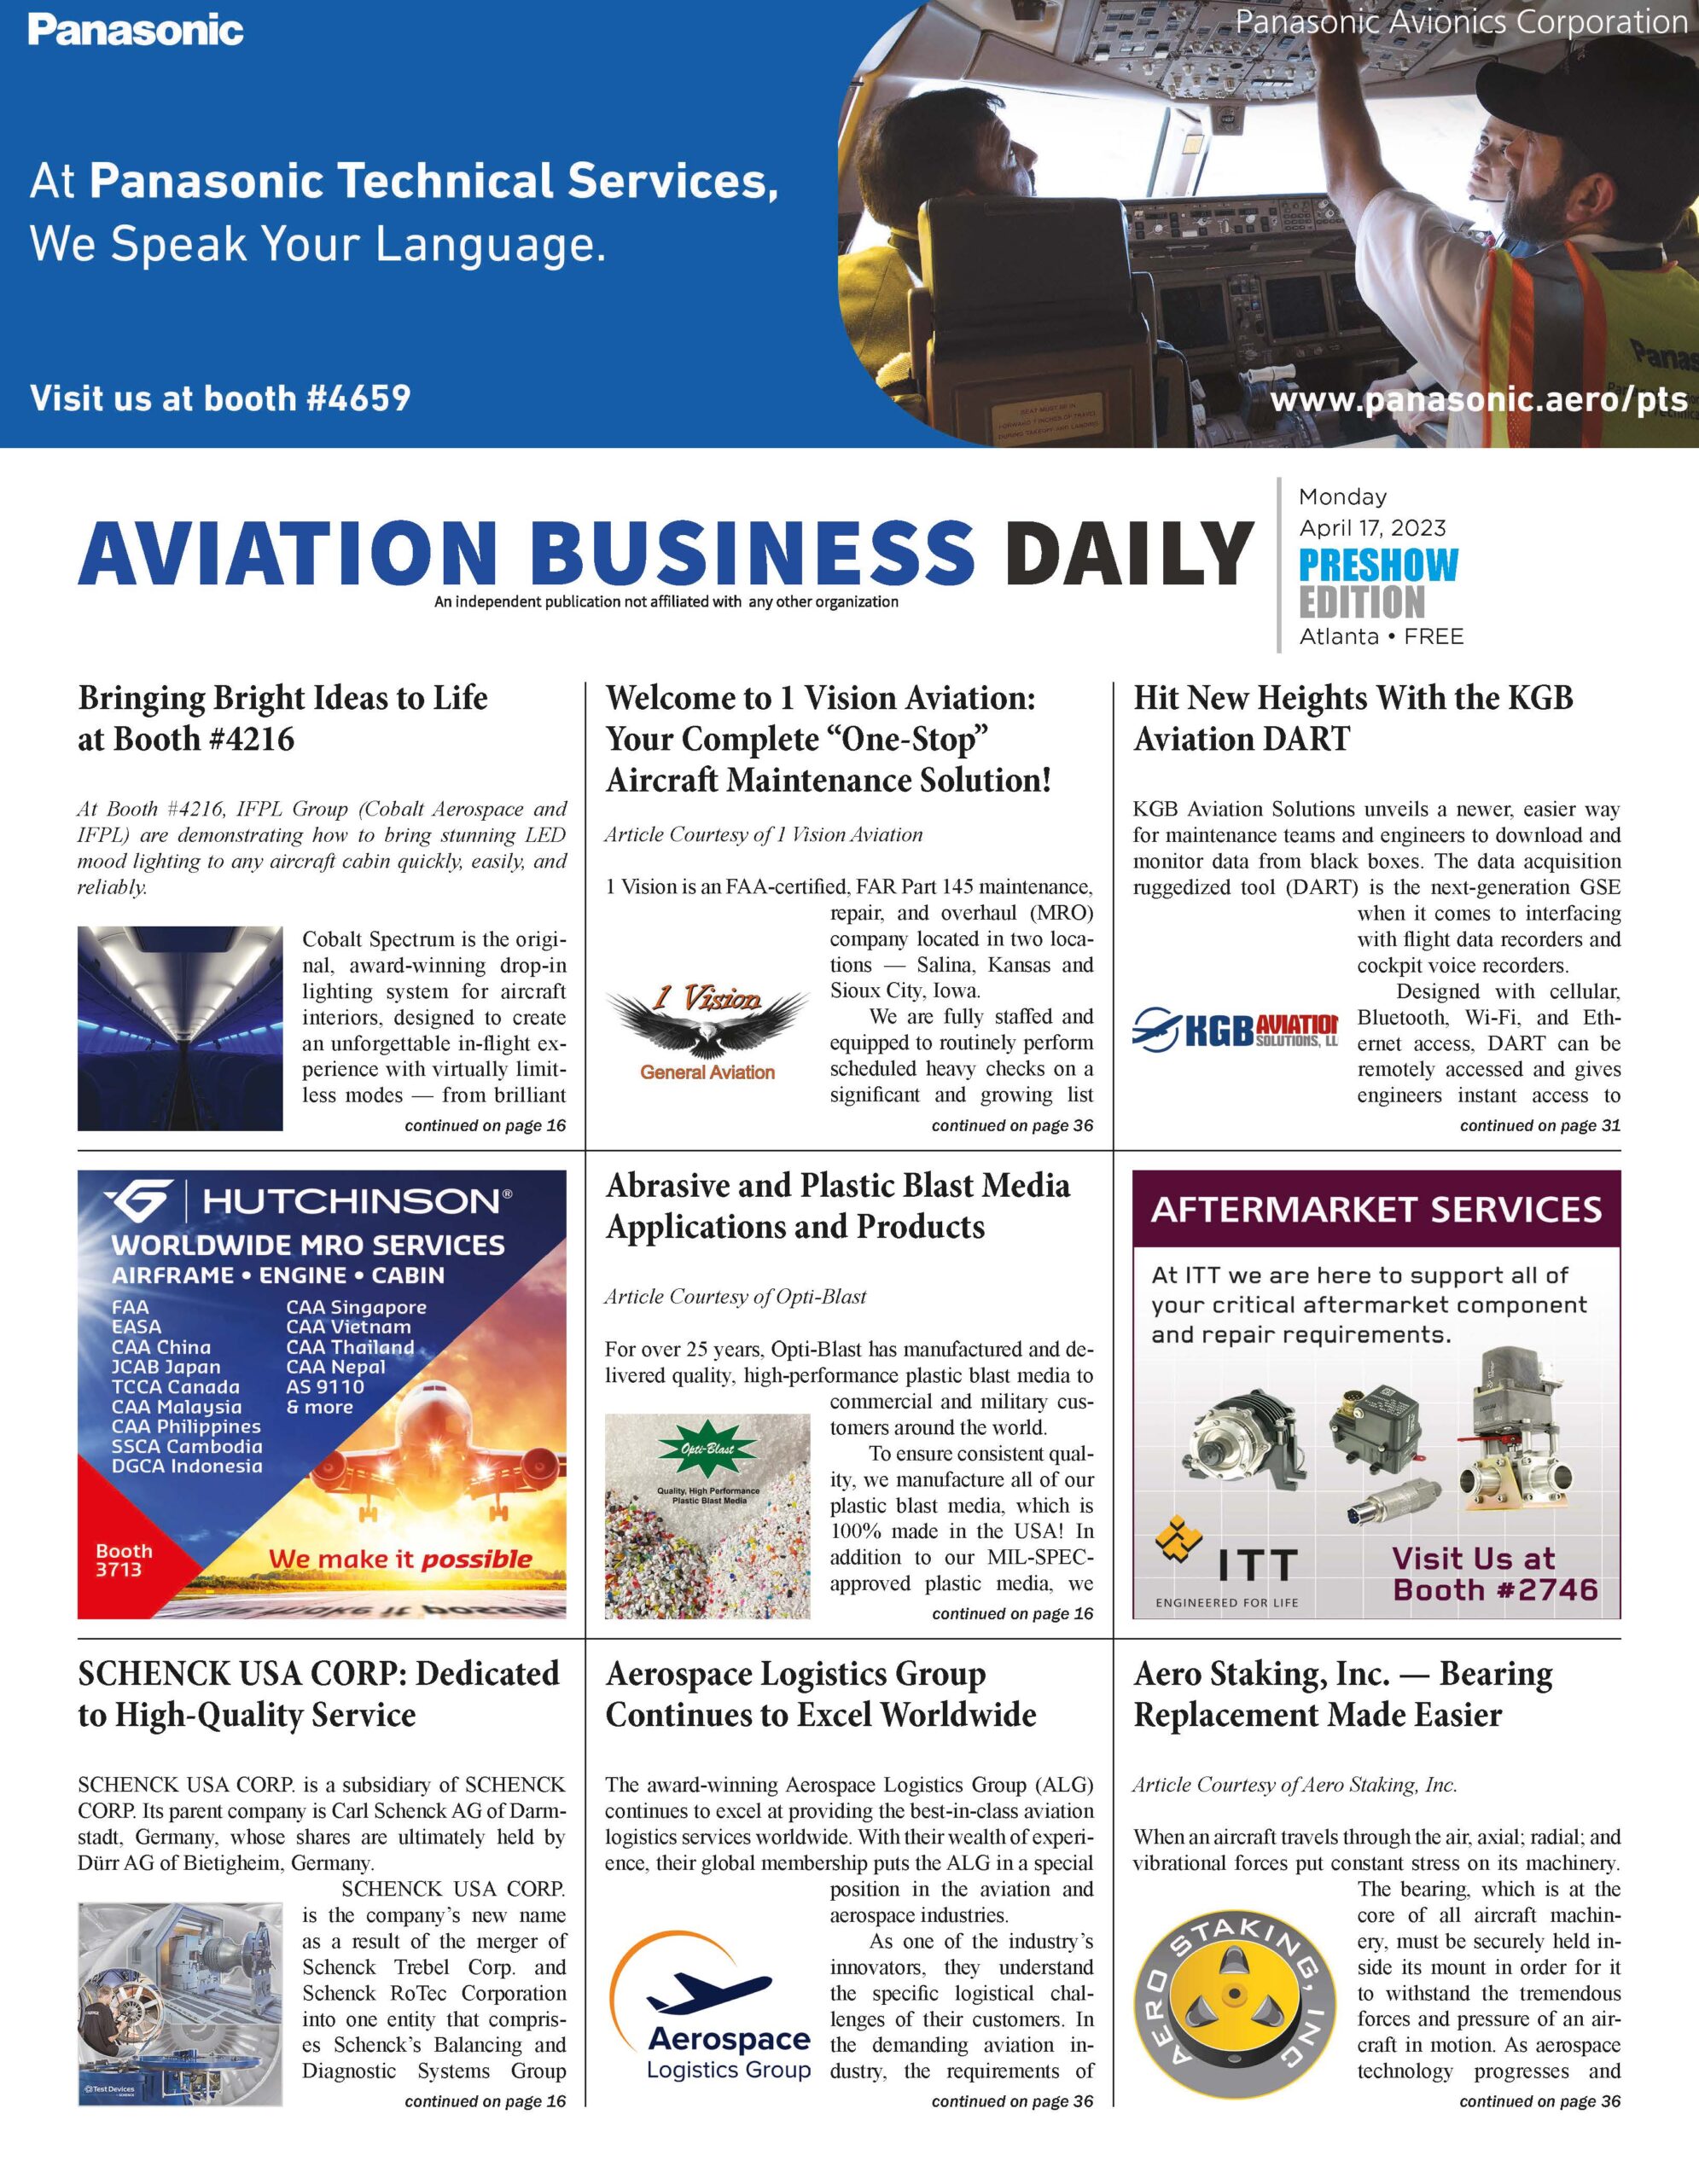 Aviation Business Daily MRO Trade Show News Publications